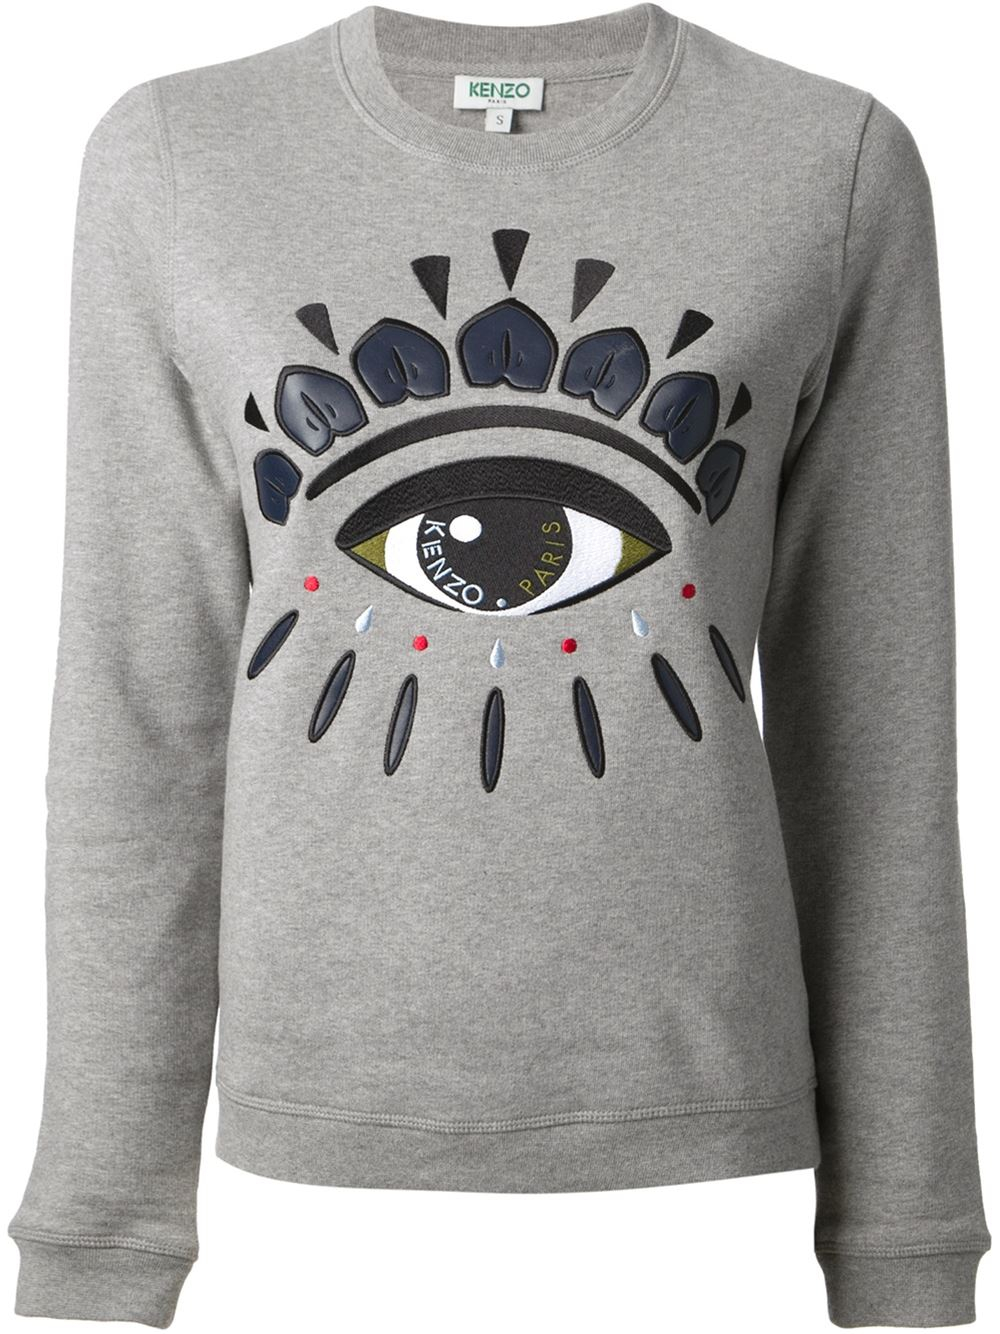 Lyst - Kenzo Embroidered Cotton Eye Sweatshirt in Gray